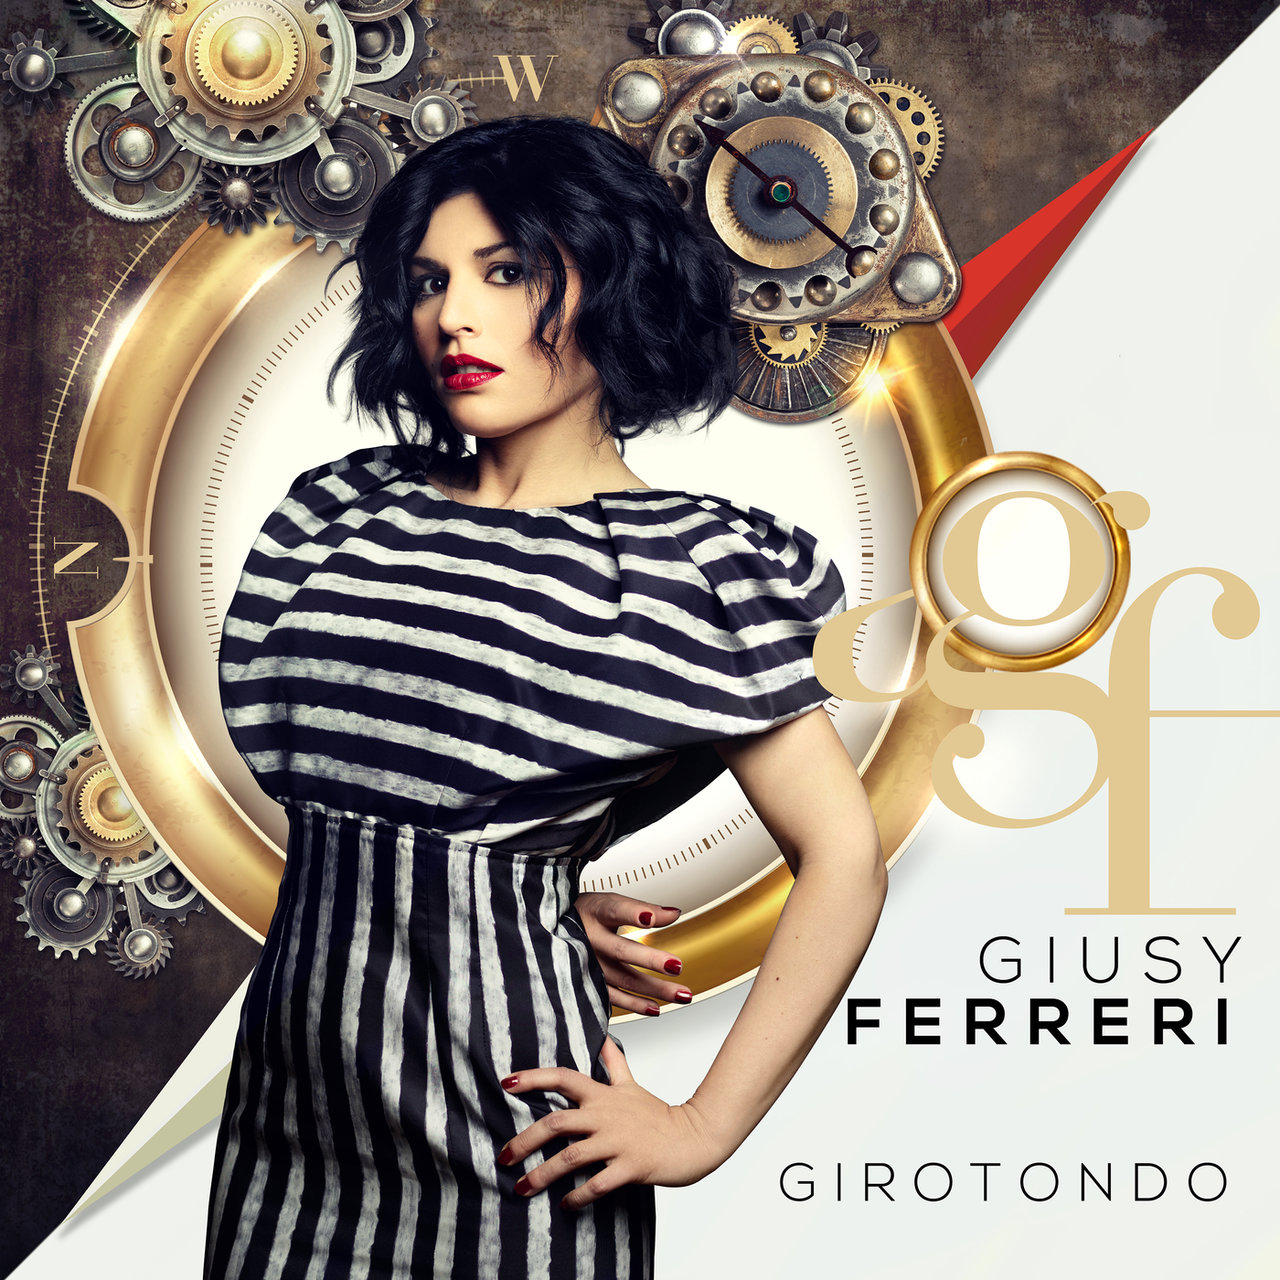 Giusy Ferreri Girotondo cover artwork